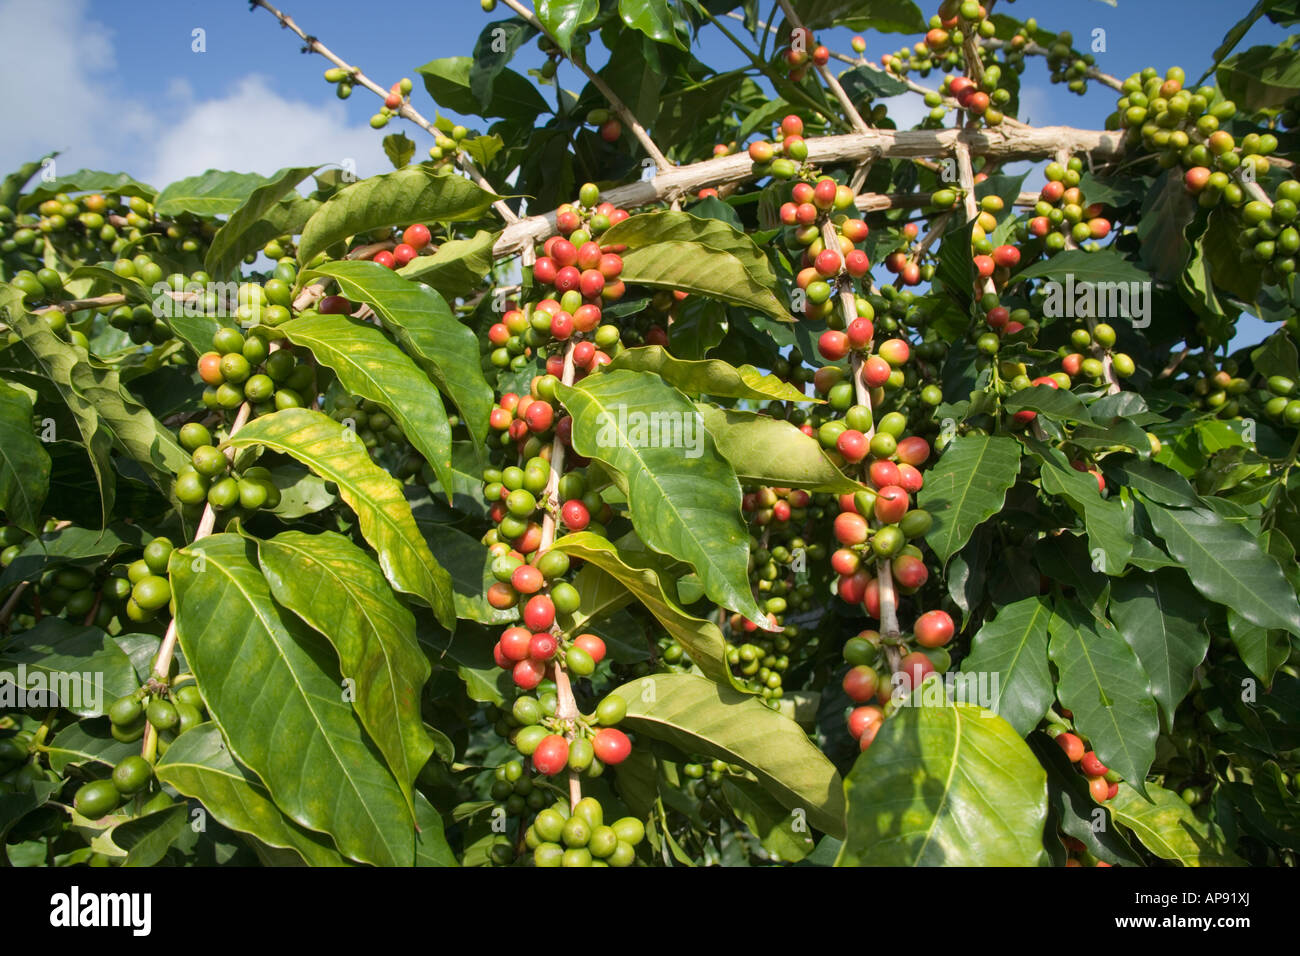 Maturing Kona Coffee beans on branch. Stock Photo